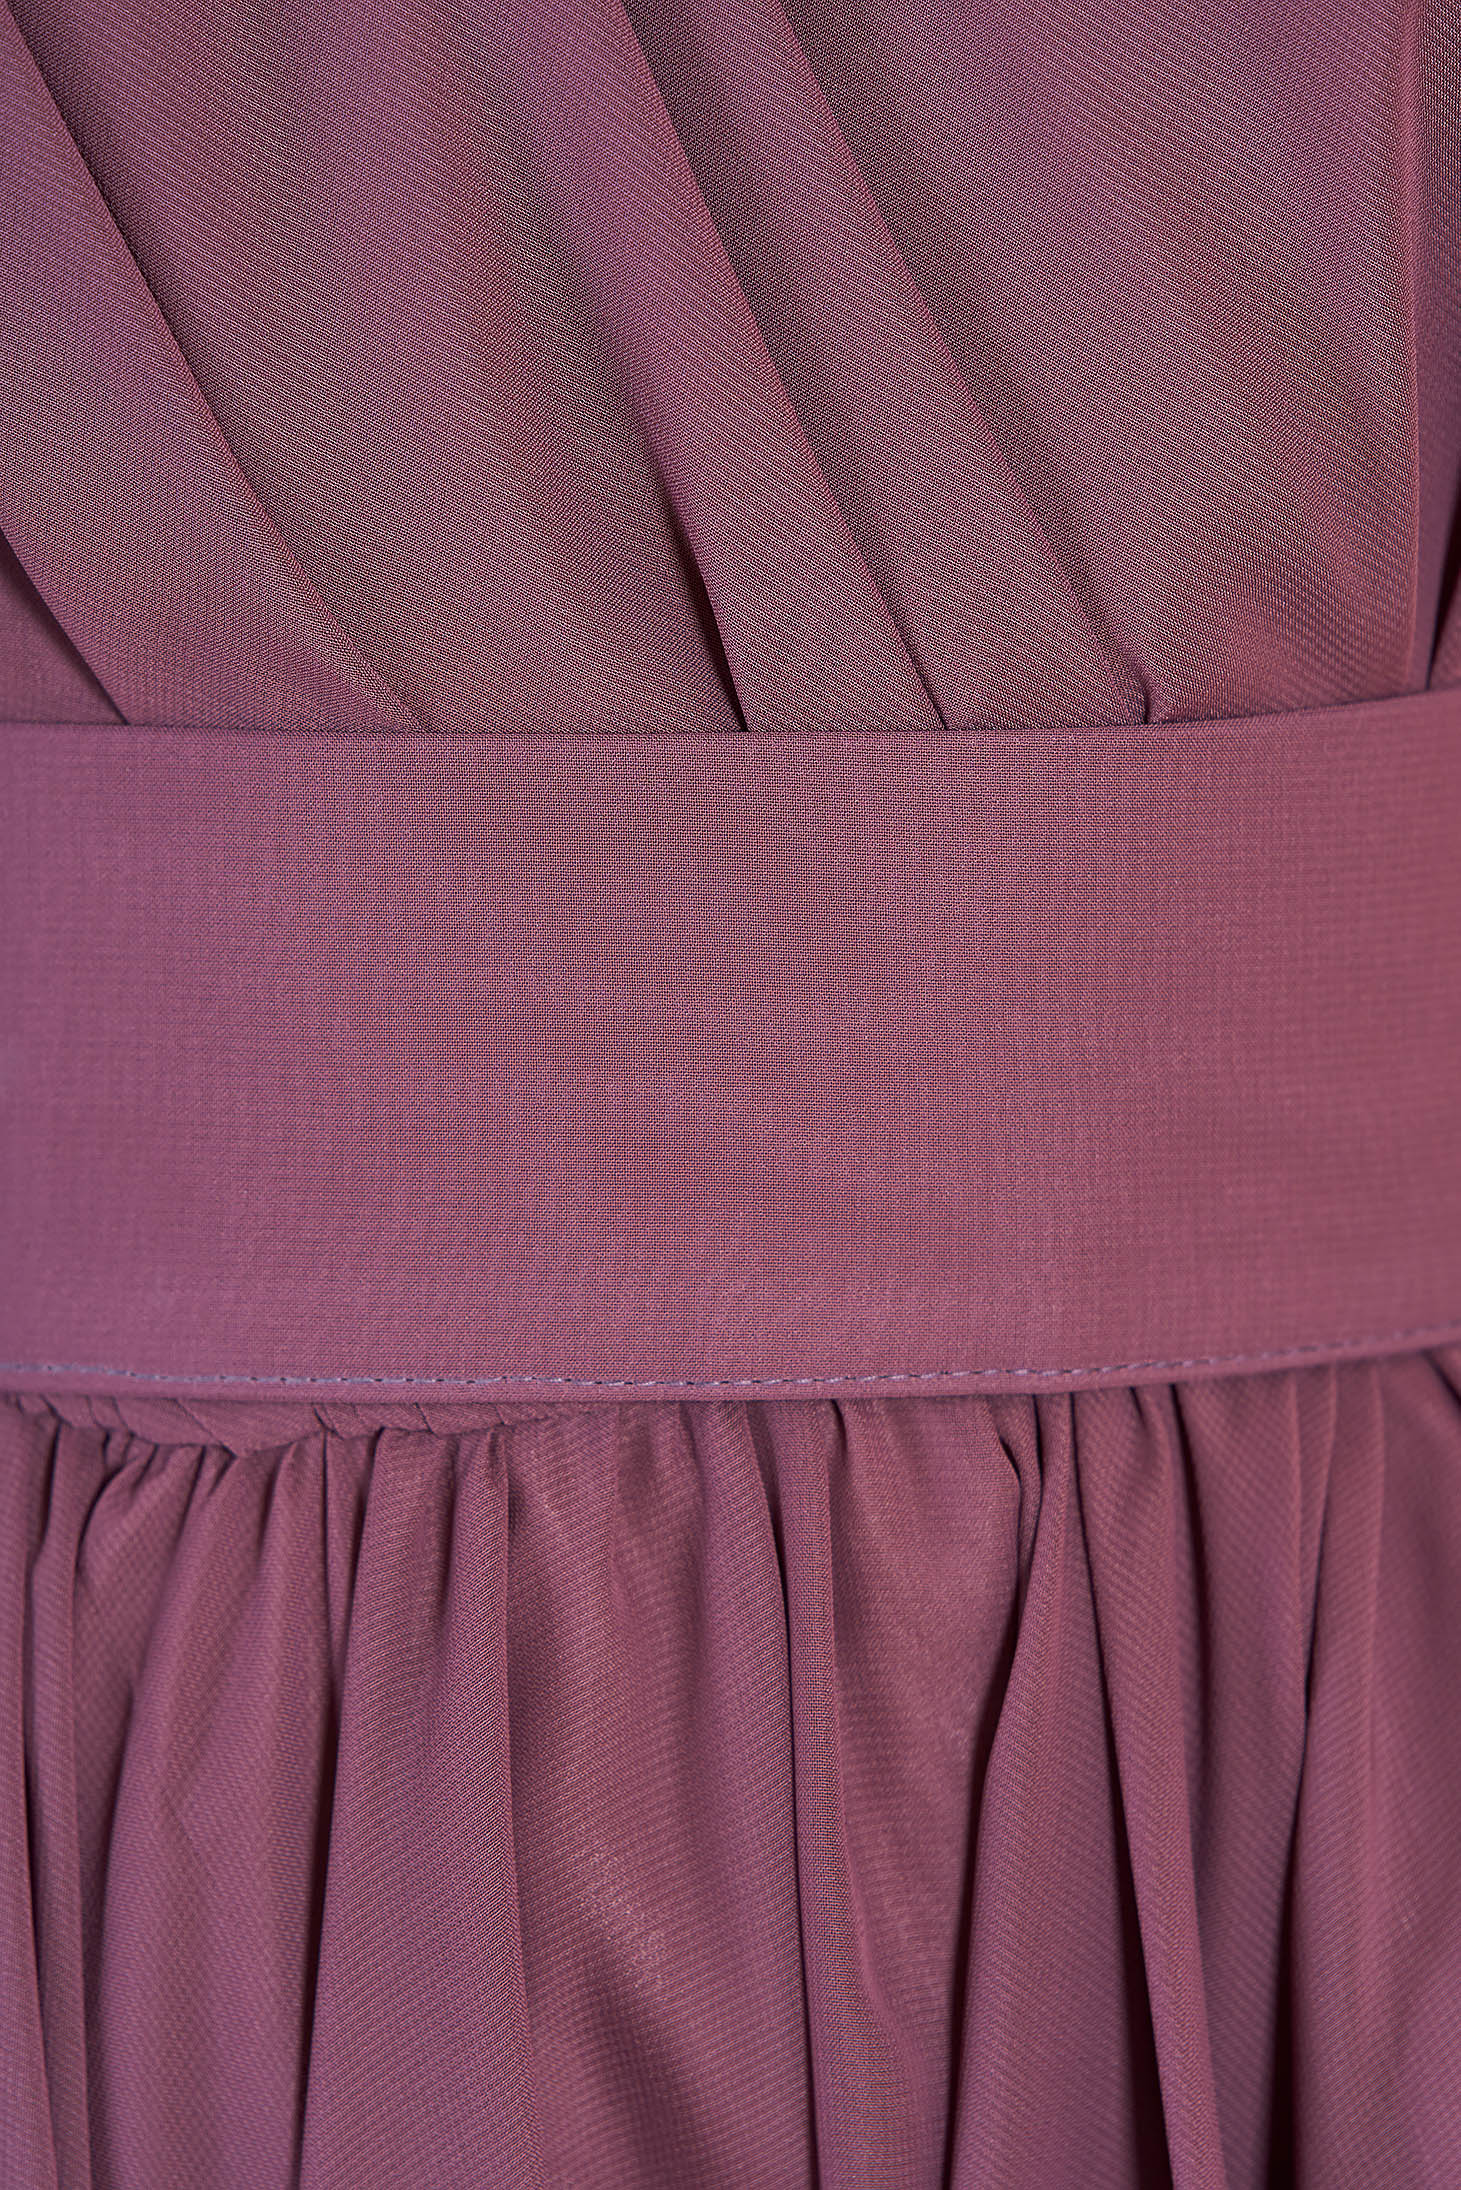 Ana Radu luxurious purple dress from veil fabric with inside lining cloche accessorized with tied waistband 4 - StarShinerS.com